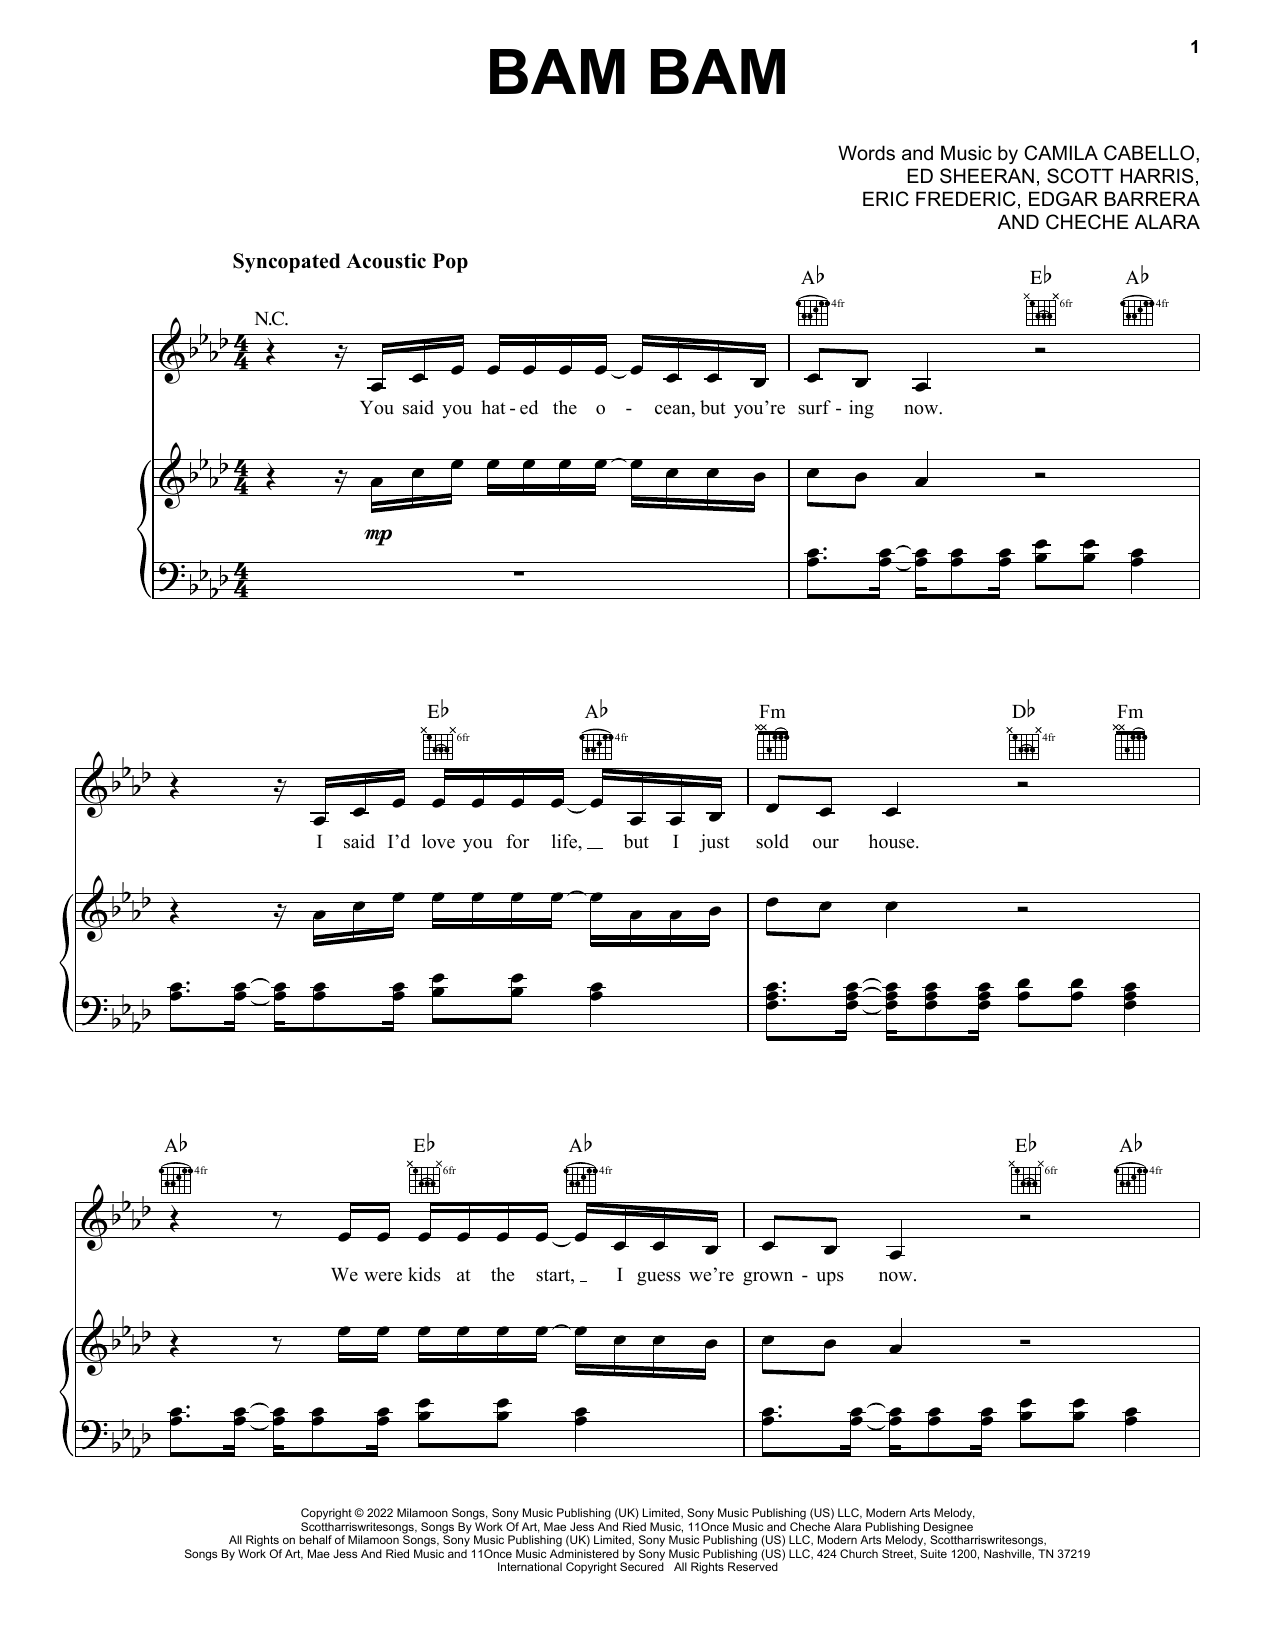 Camila Cabello Bam Bam sheet music notes and chords. Download Printable PDF.